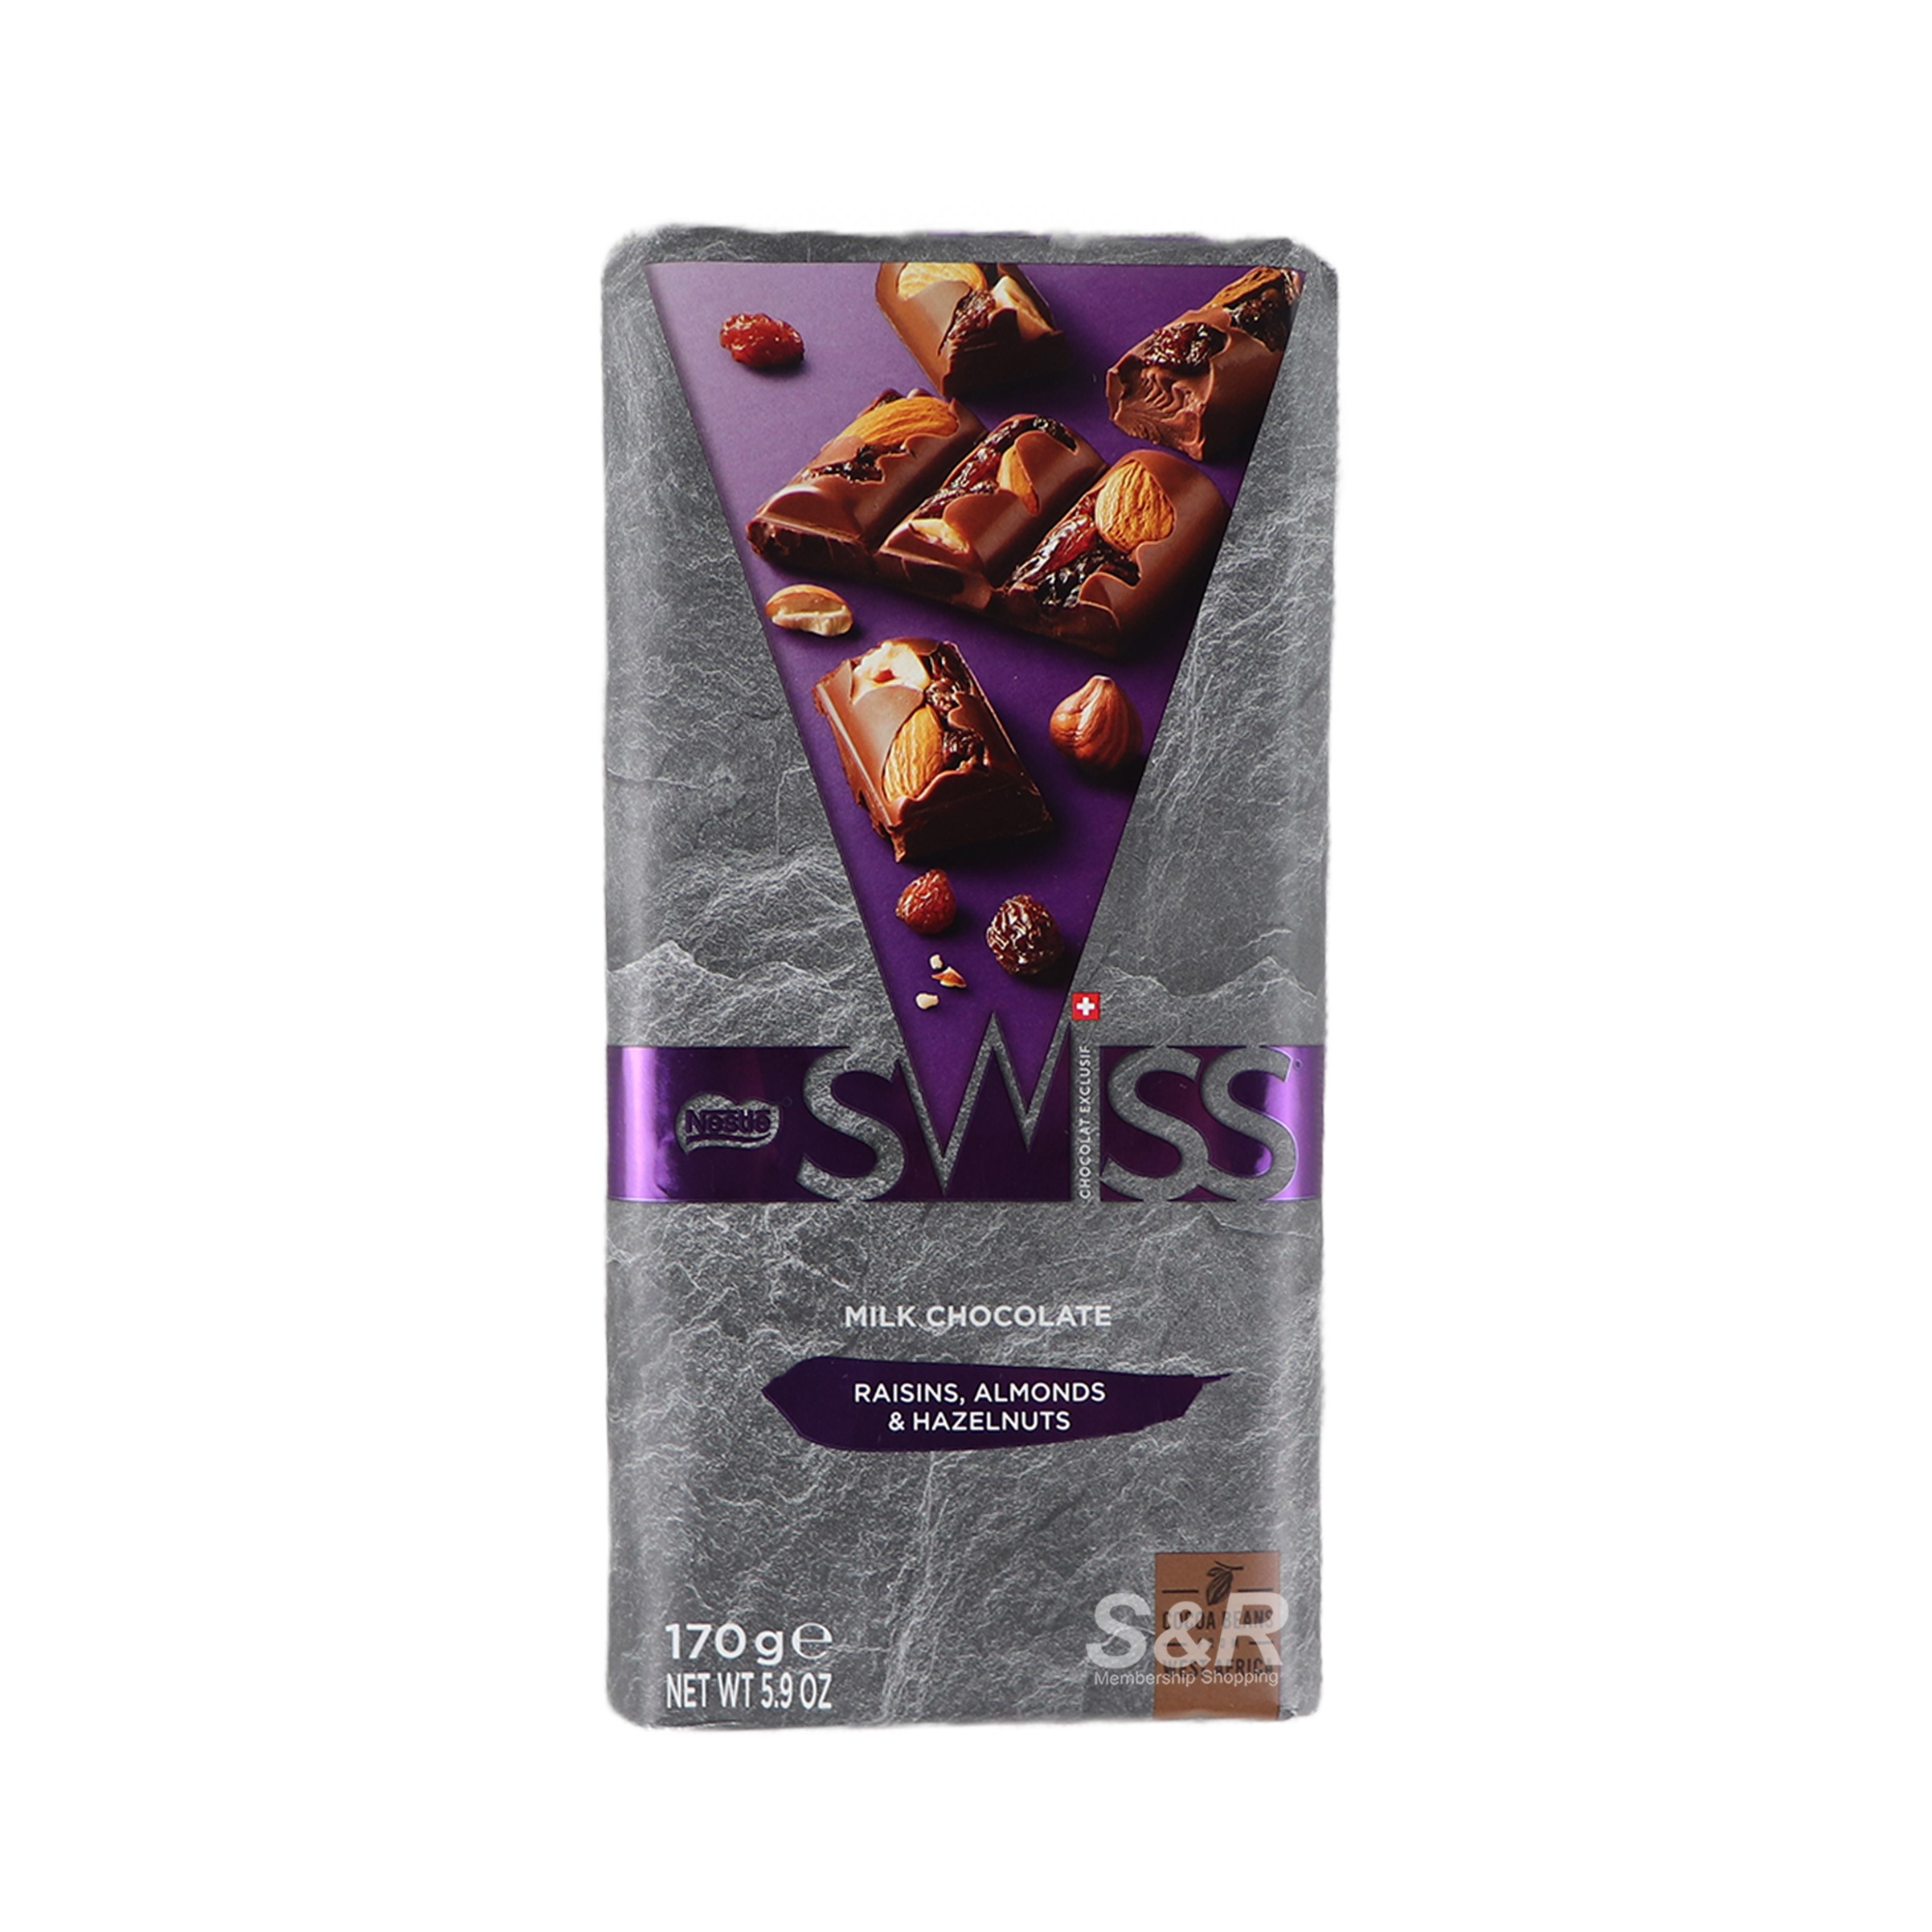 Nestle Swiss Raisins, Almonds, & Hazelnuts Milk Chocolate 170g